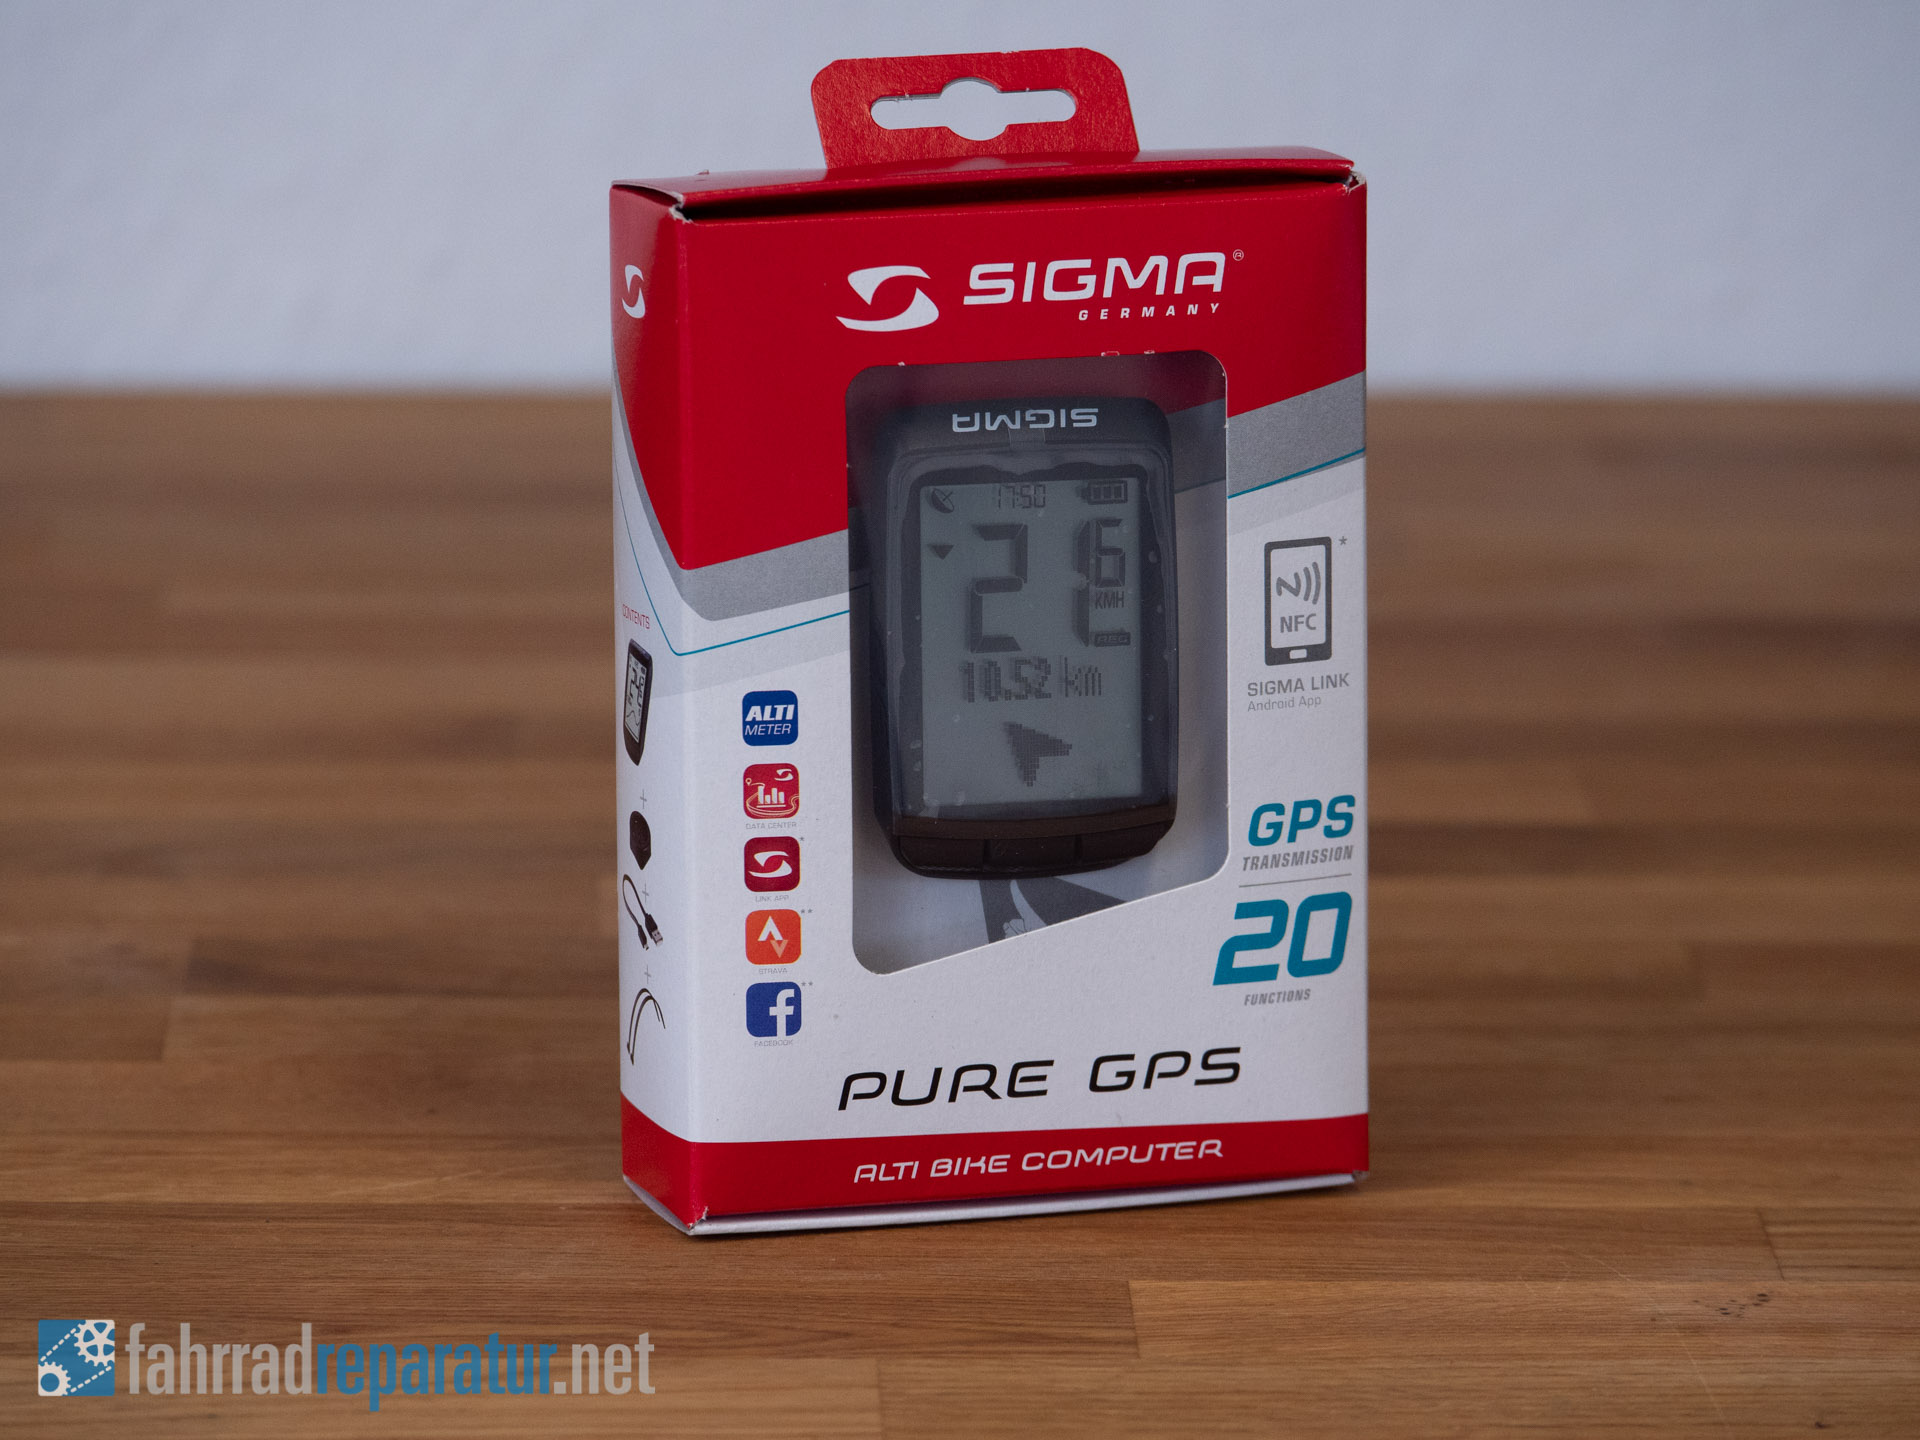 Sigma Pure GPS - Einstieg - velonerd.cc